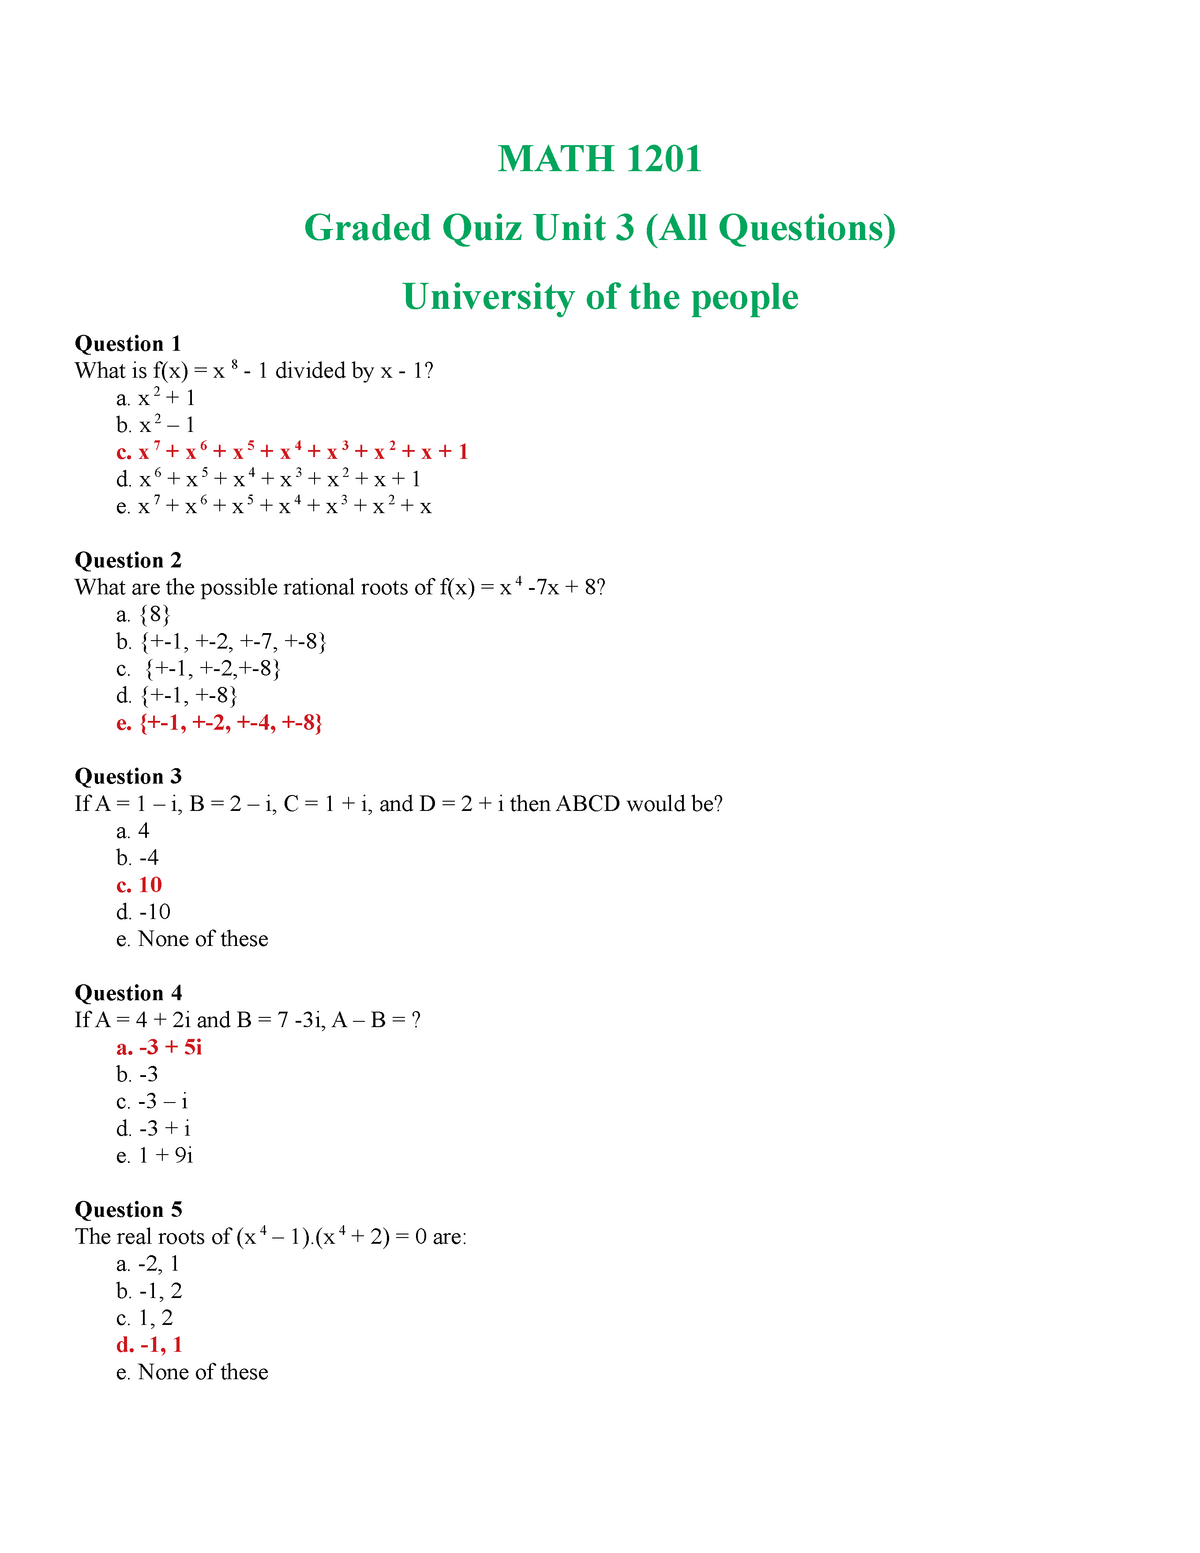 Full Graded Quiz Unit 3 Selection Of My Best Coursework Math 11 Graded Quiz Unit 3 All Studocu